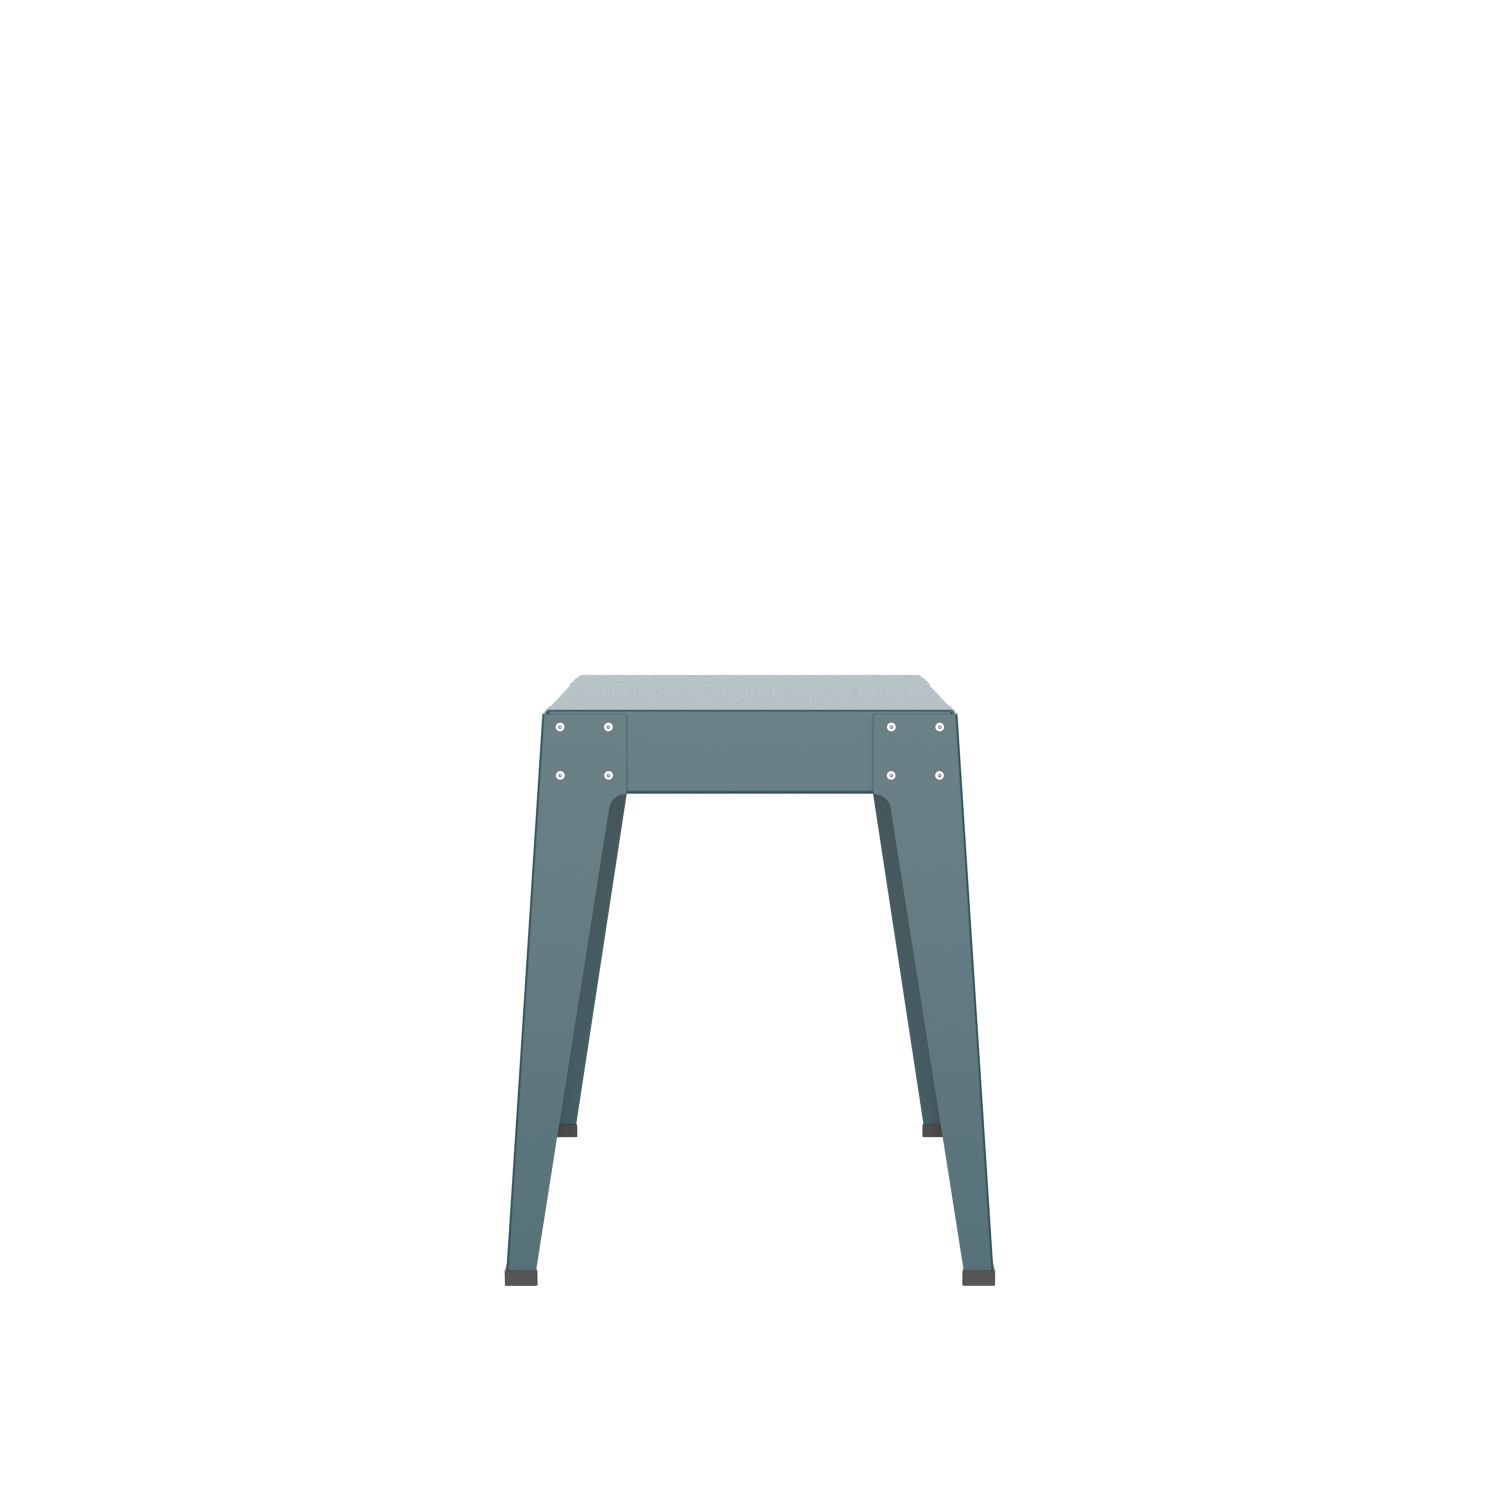 lensvelt piet hein eek aluminium series stool ocean blue ral5020 hard leg ends